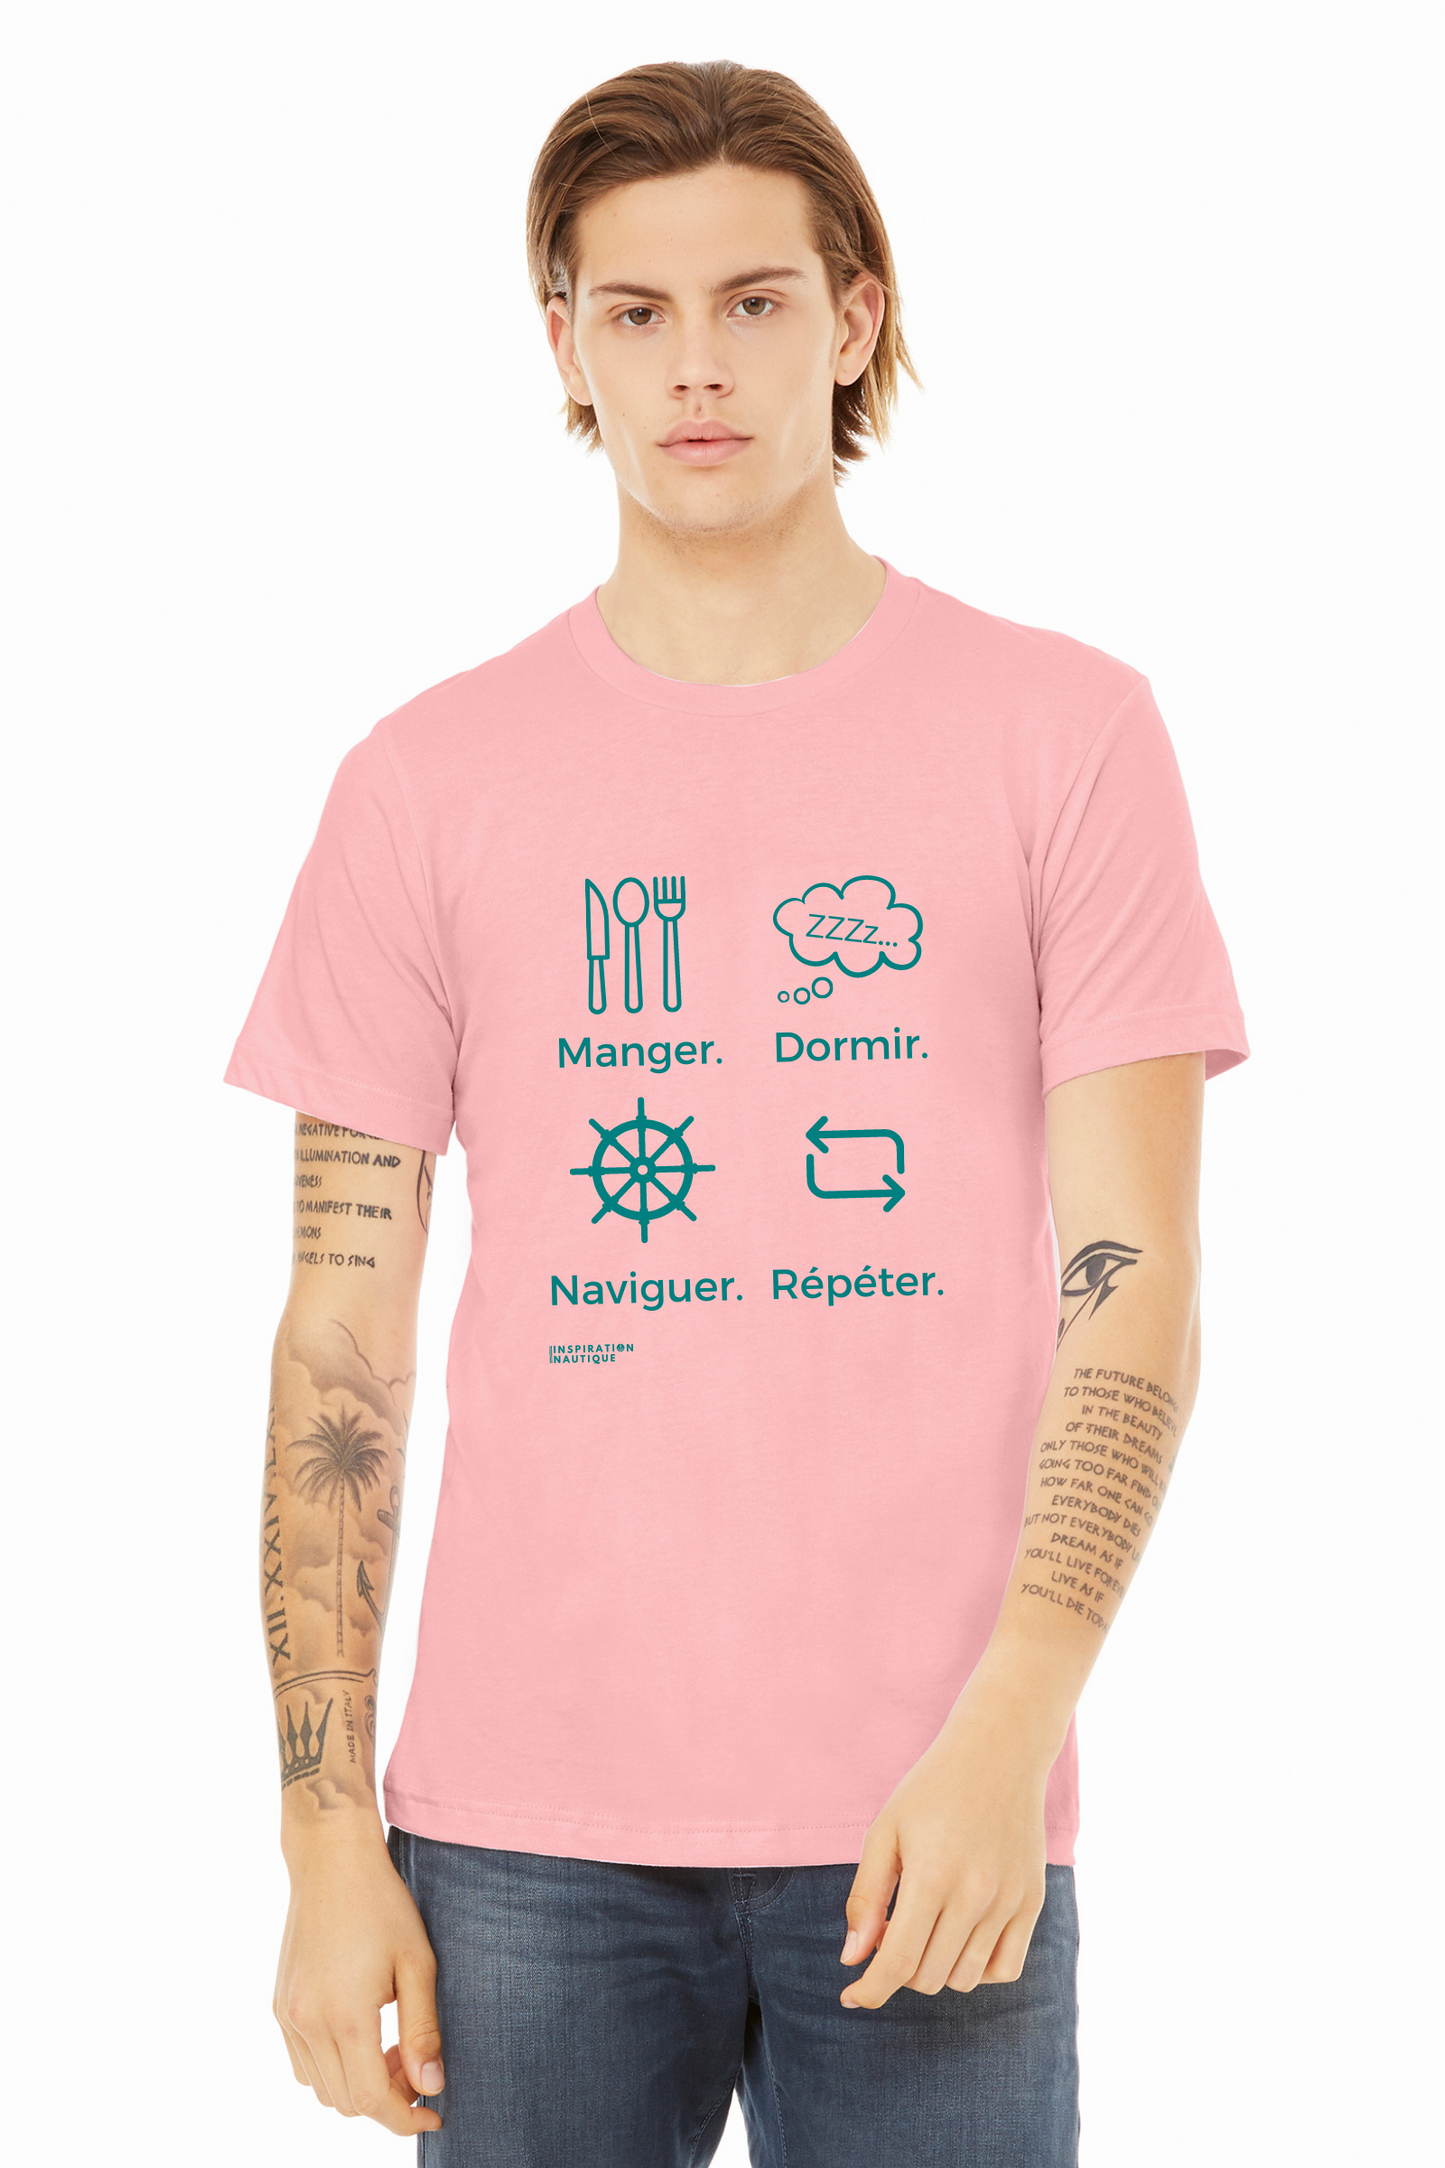 Unisex T-shirt: Eat, Sleep, Sail, Repeat (Wheel) - Teal Visual